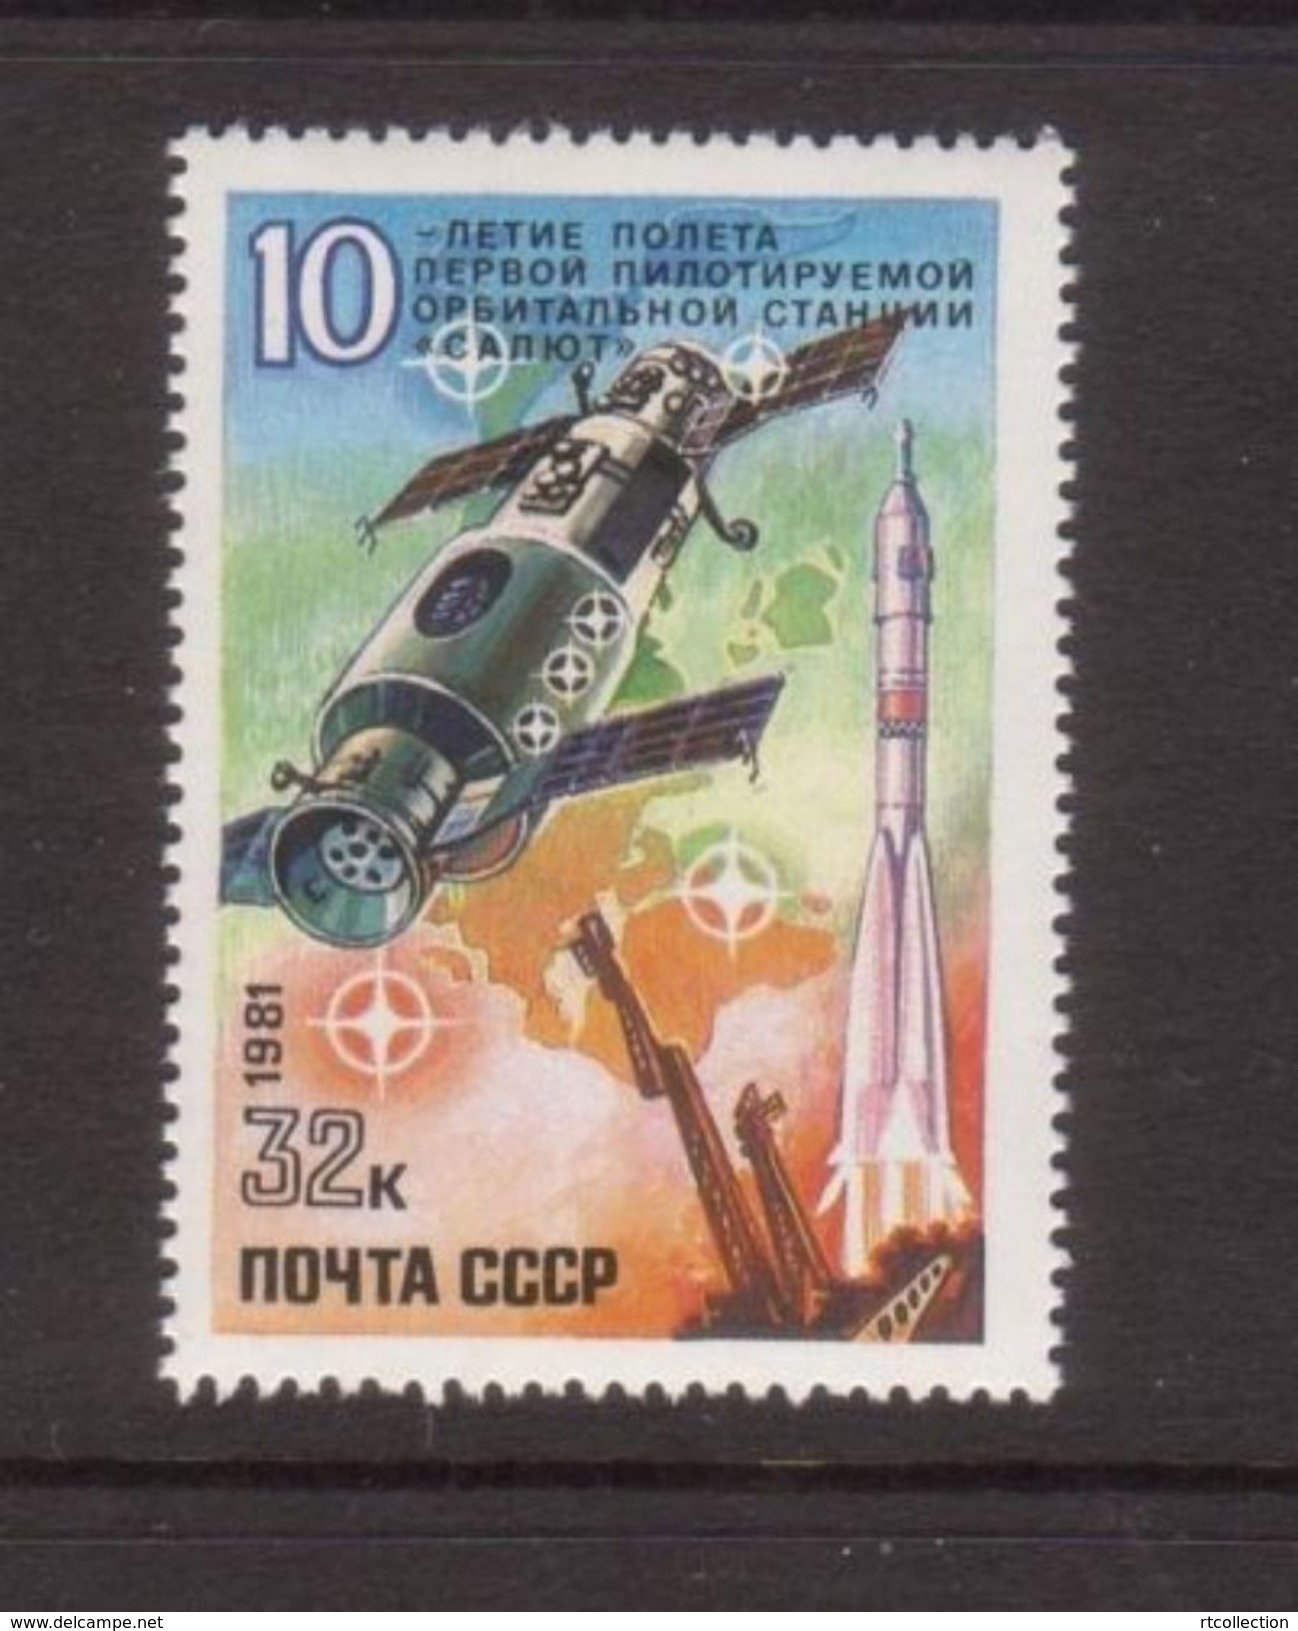 USSR Russia 1981 First Manned Space Sation 10th Anniv Salyut Orbital Spaceflight Explore Sciences Stamp Mi 5060 SG5115 - Verzamelingen